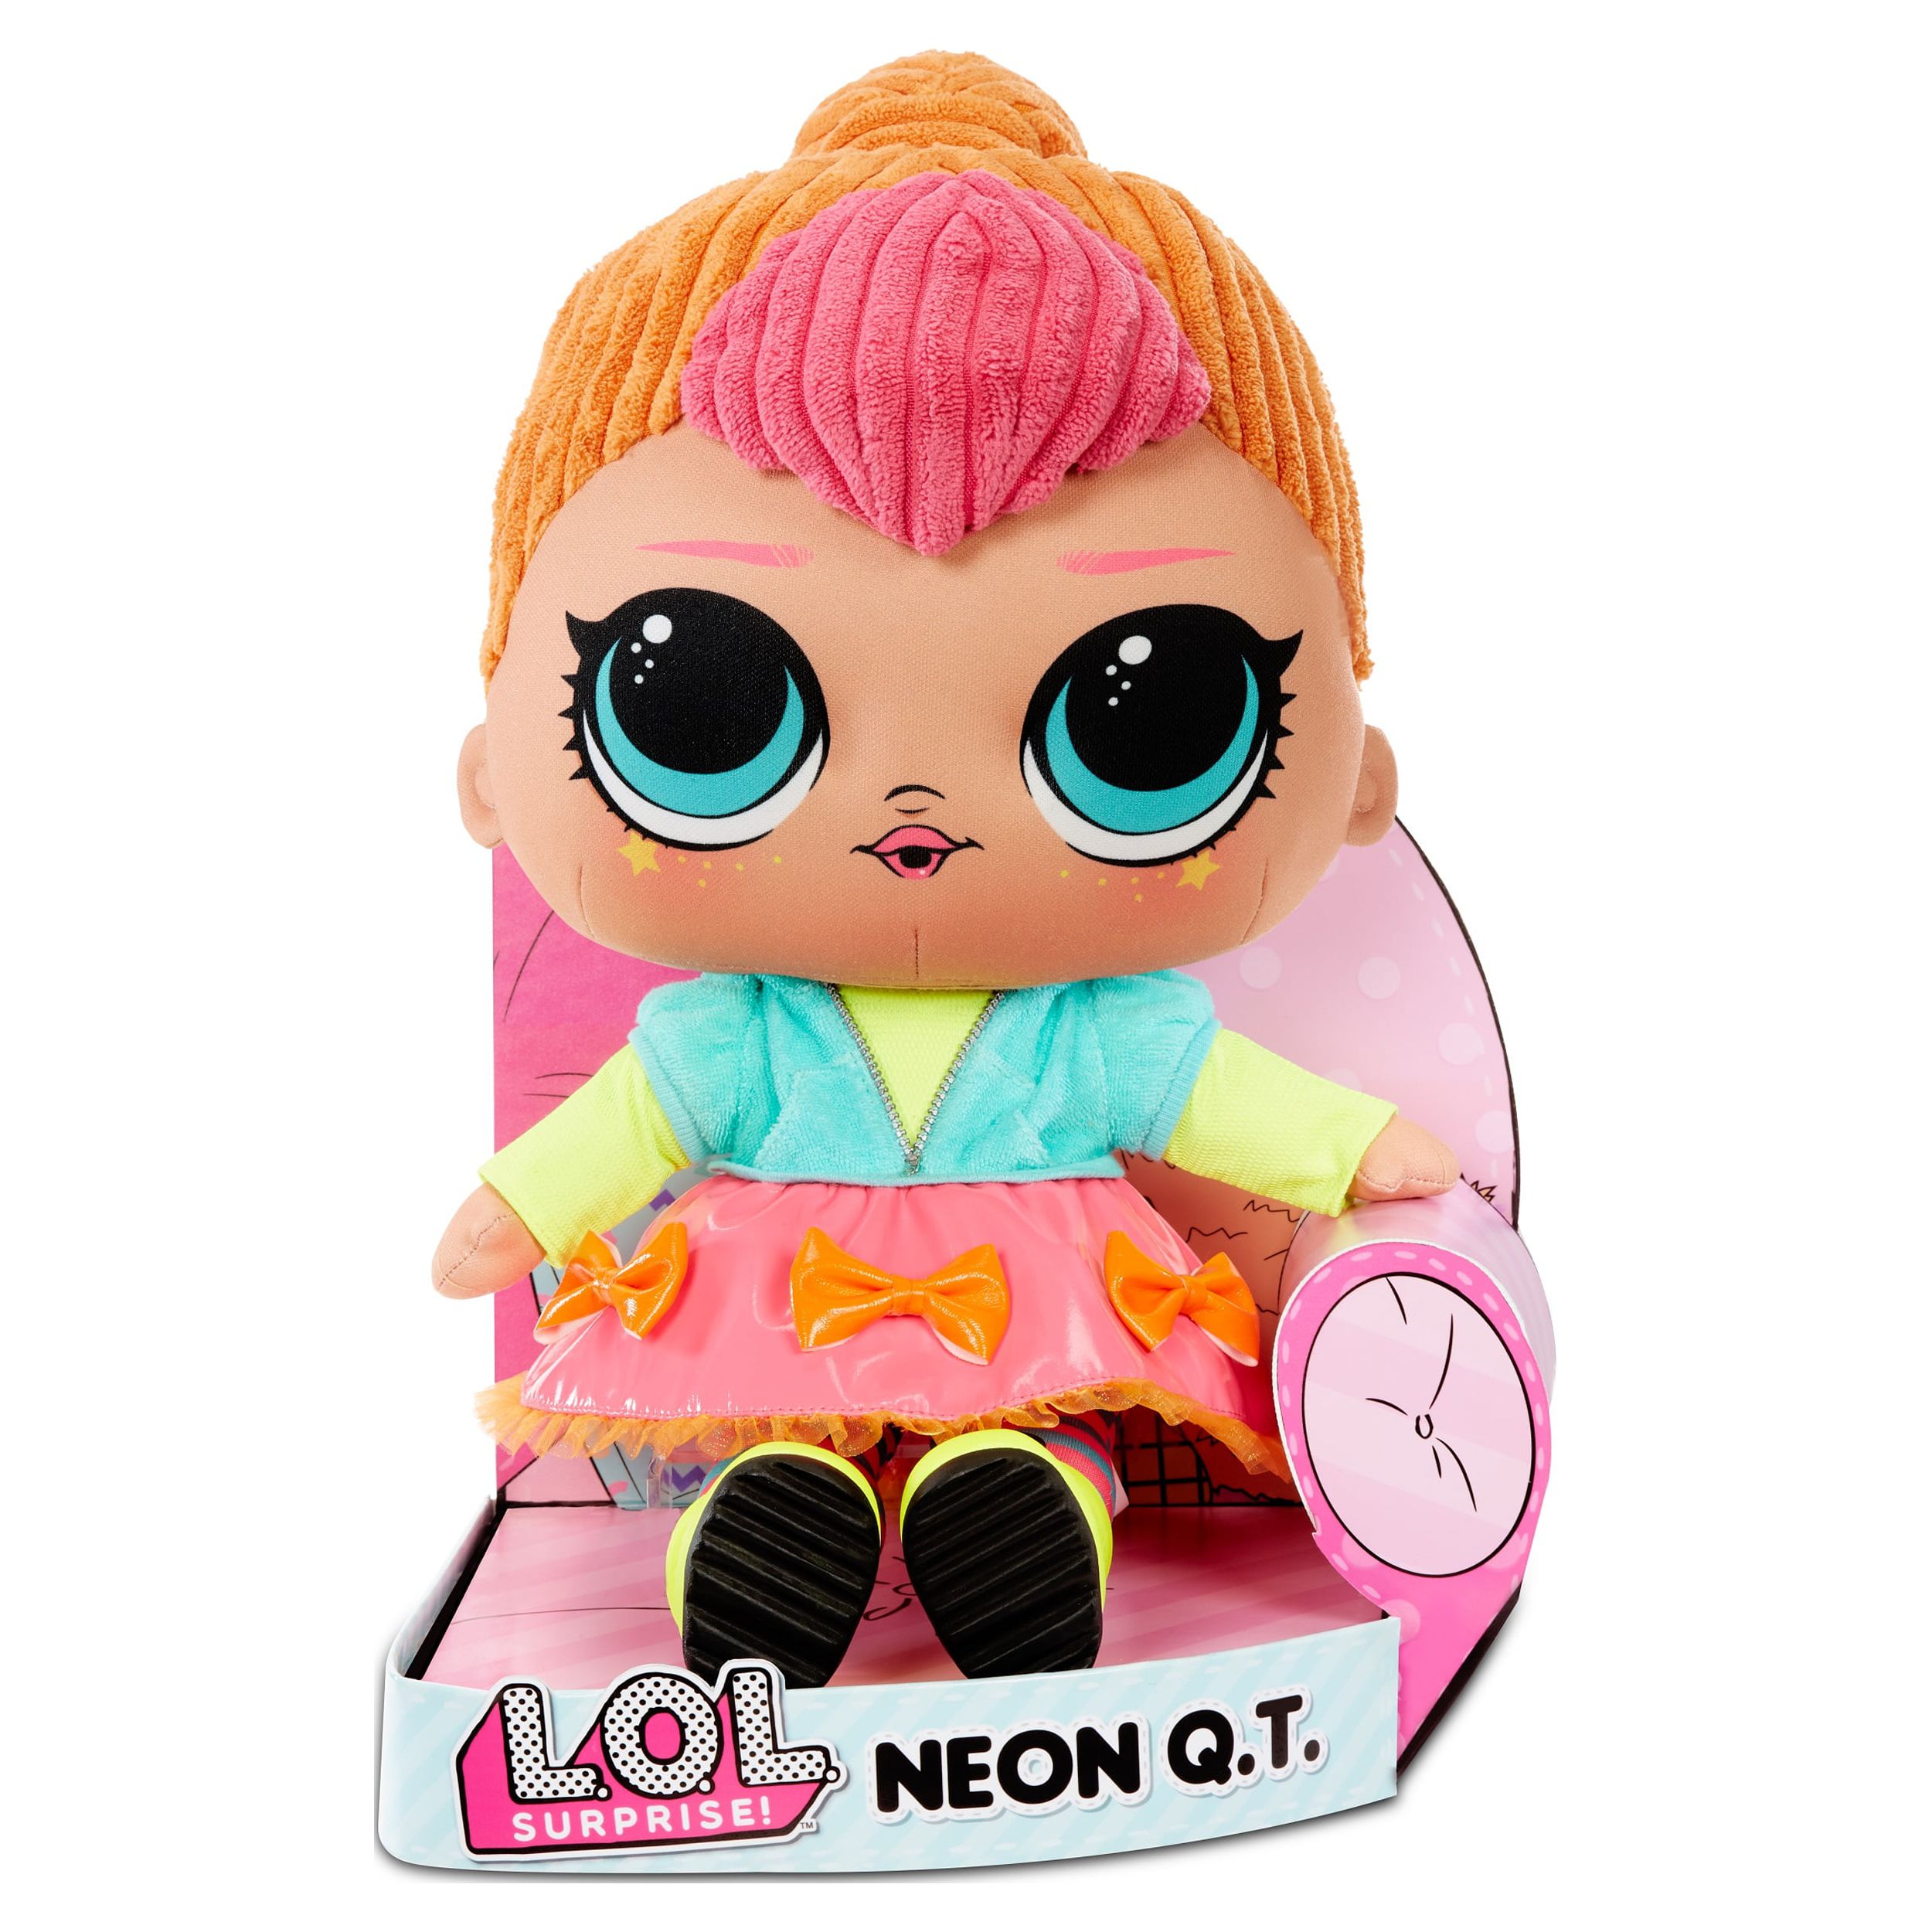 LOL Surprise Neon Q.T. - Huggable, Soft Plush Doll For Kids Ages 3+ - image 1 of 11